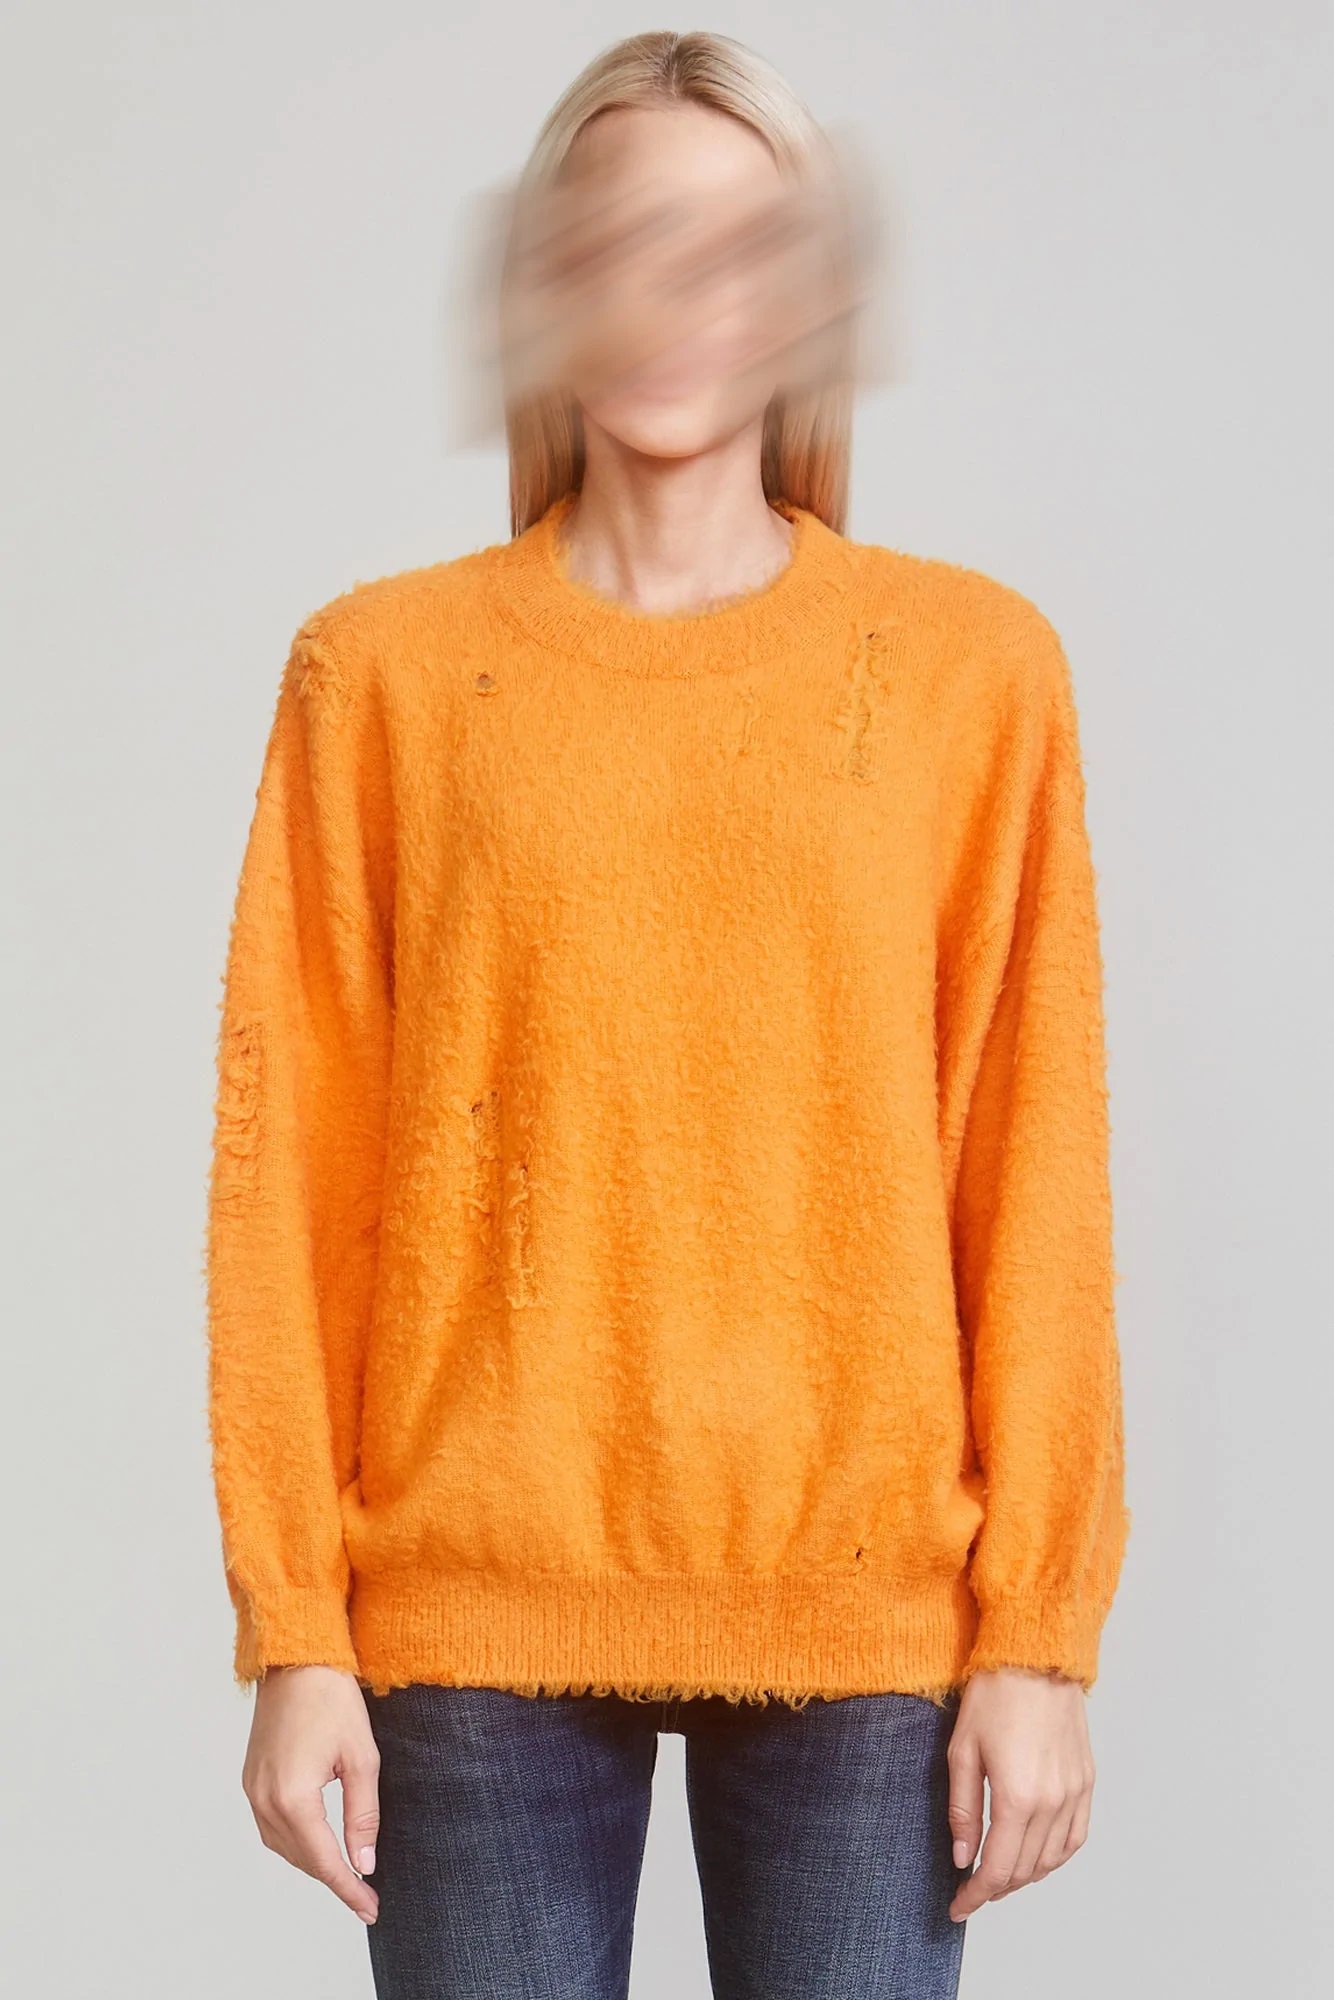 R13 Shaggy Oversized Knit Sweater in Orange